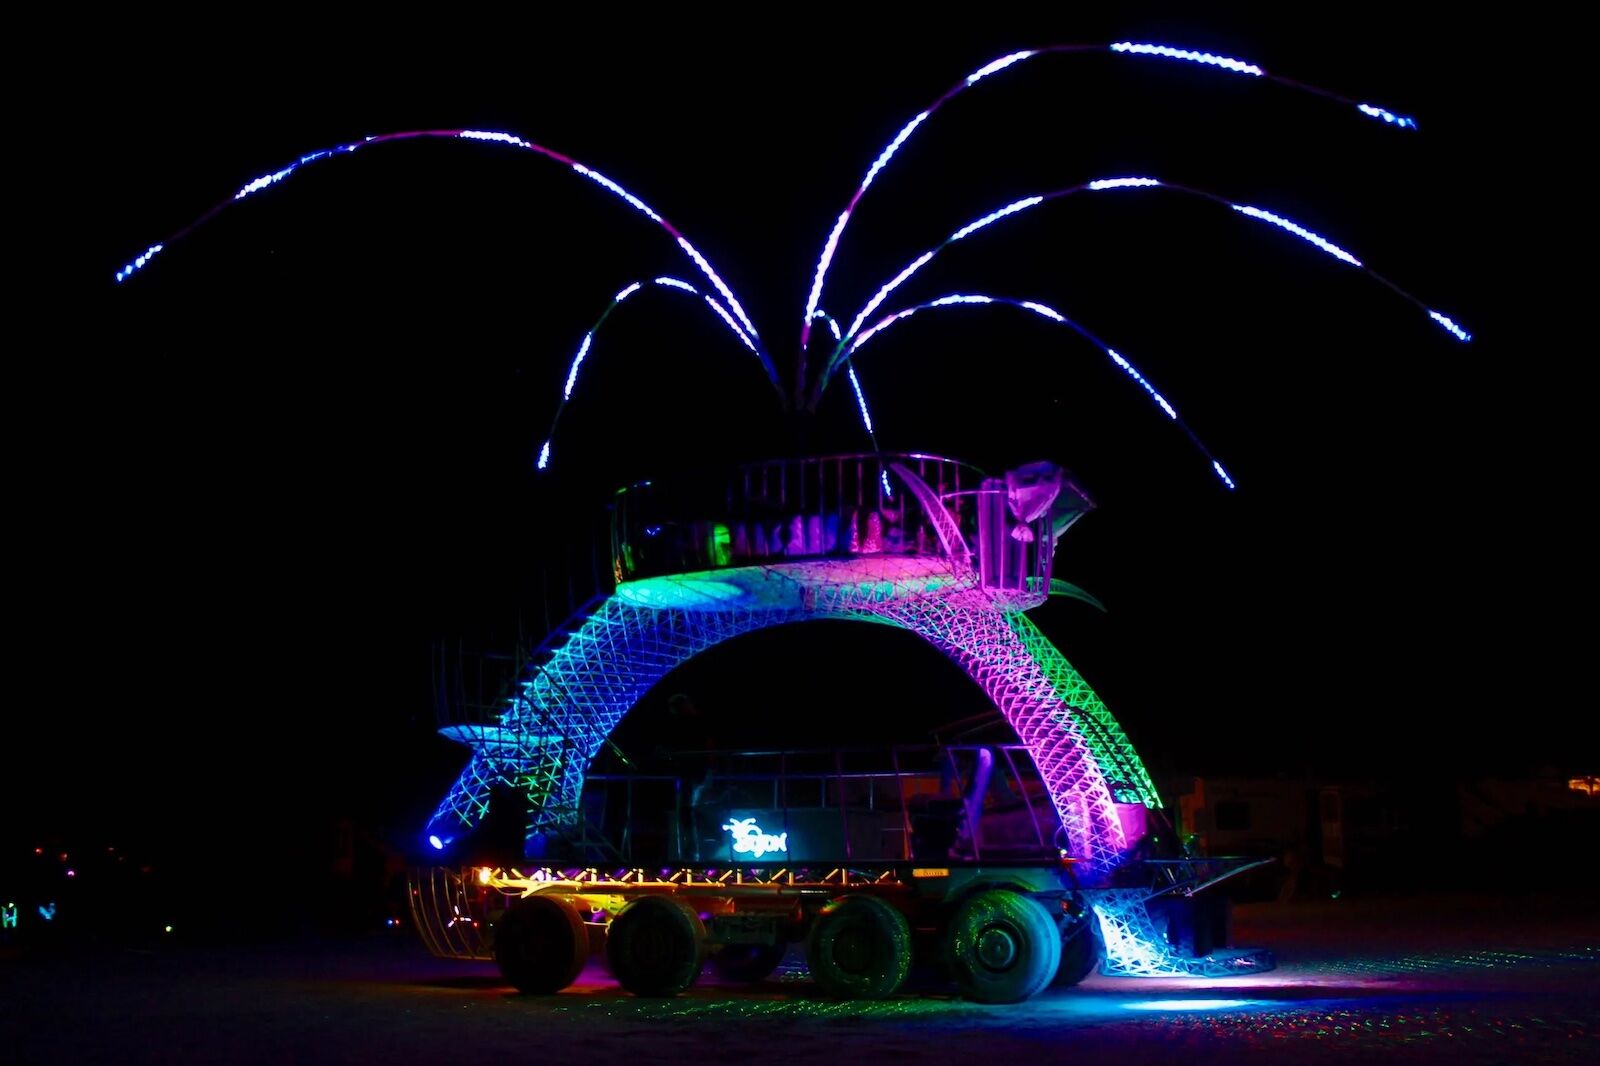 Art from Burning Man 2022: "Silv-i" by Marco Cochrane